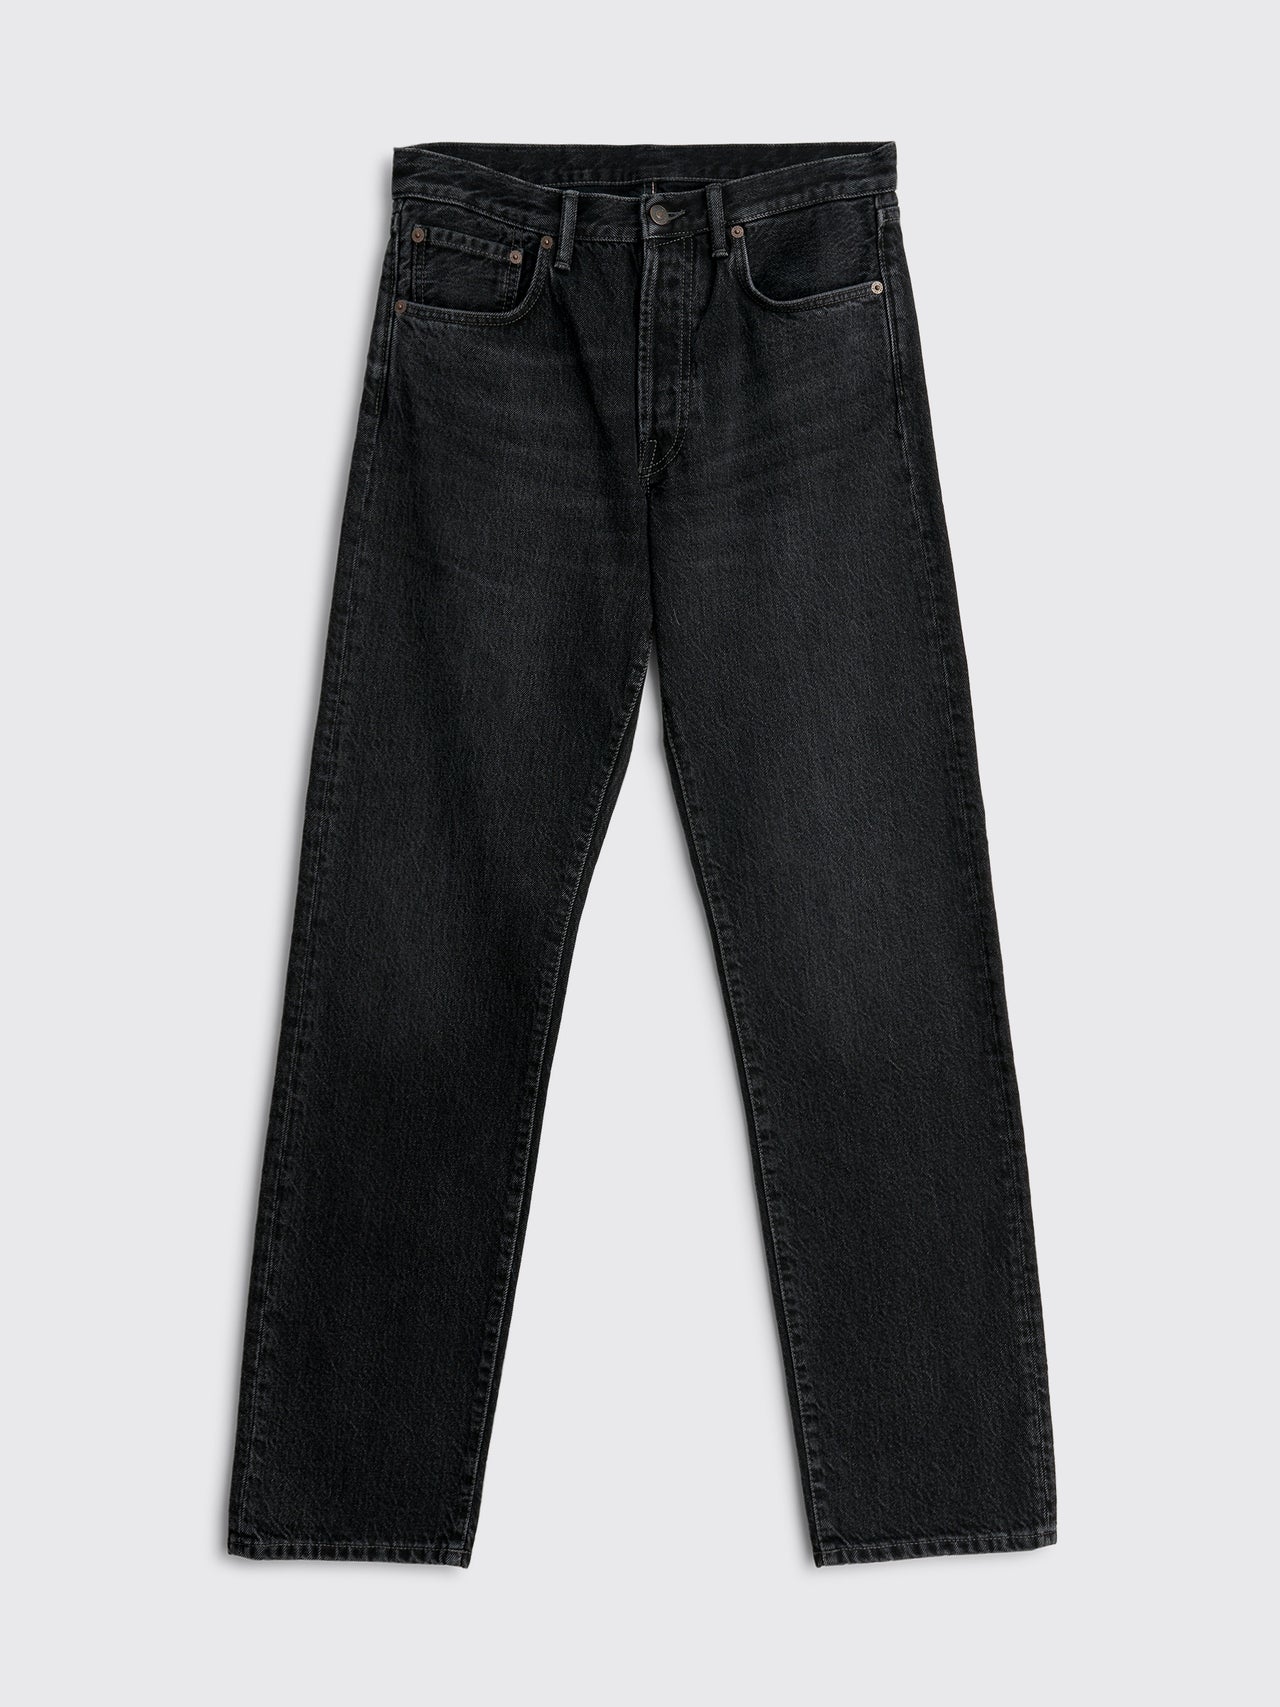 Acne Studios 1996 Jeans Vintage Black